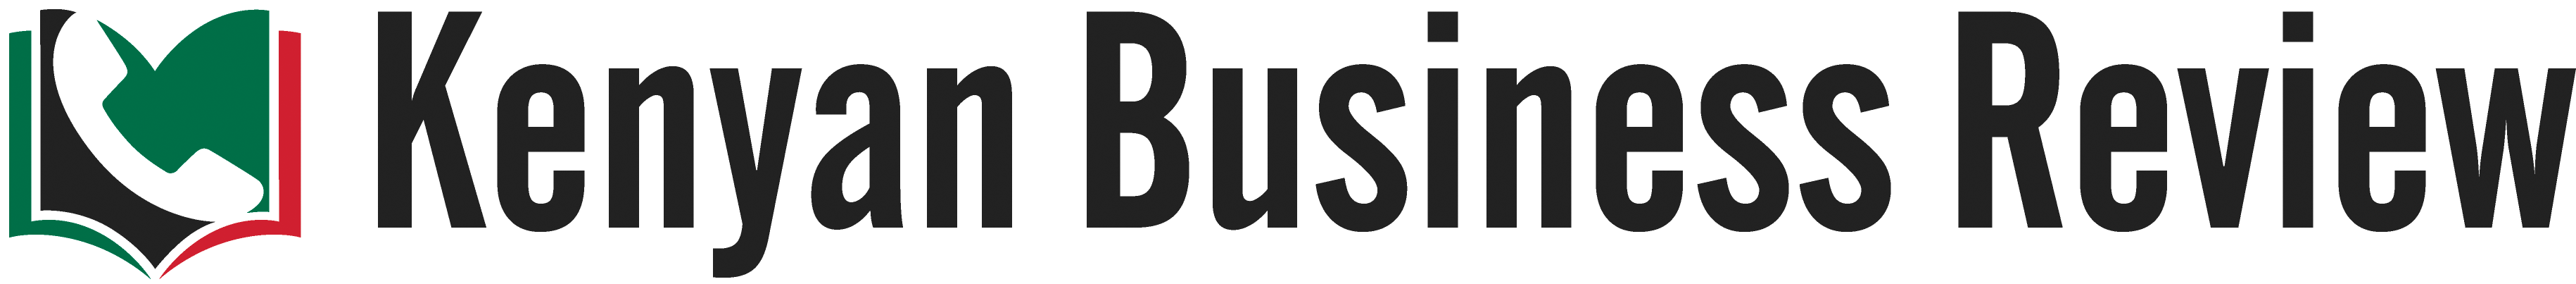 kenyan-business-review-logo